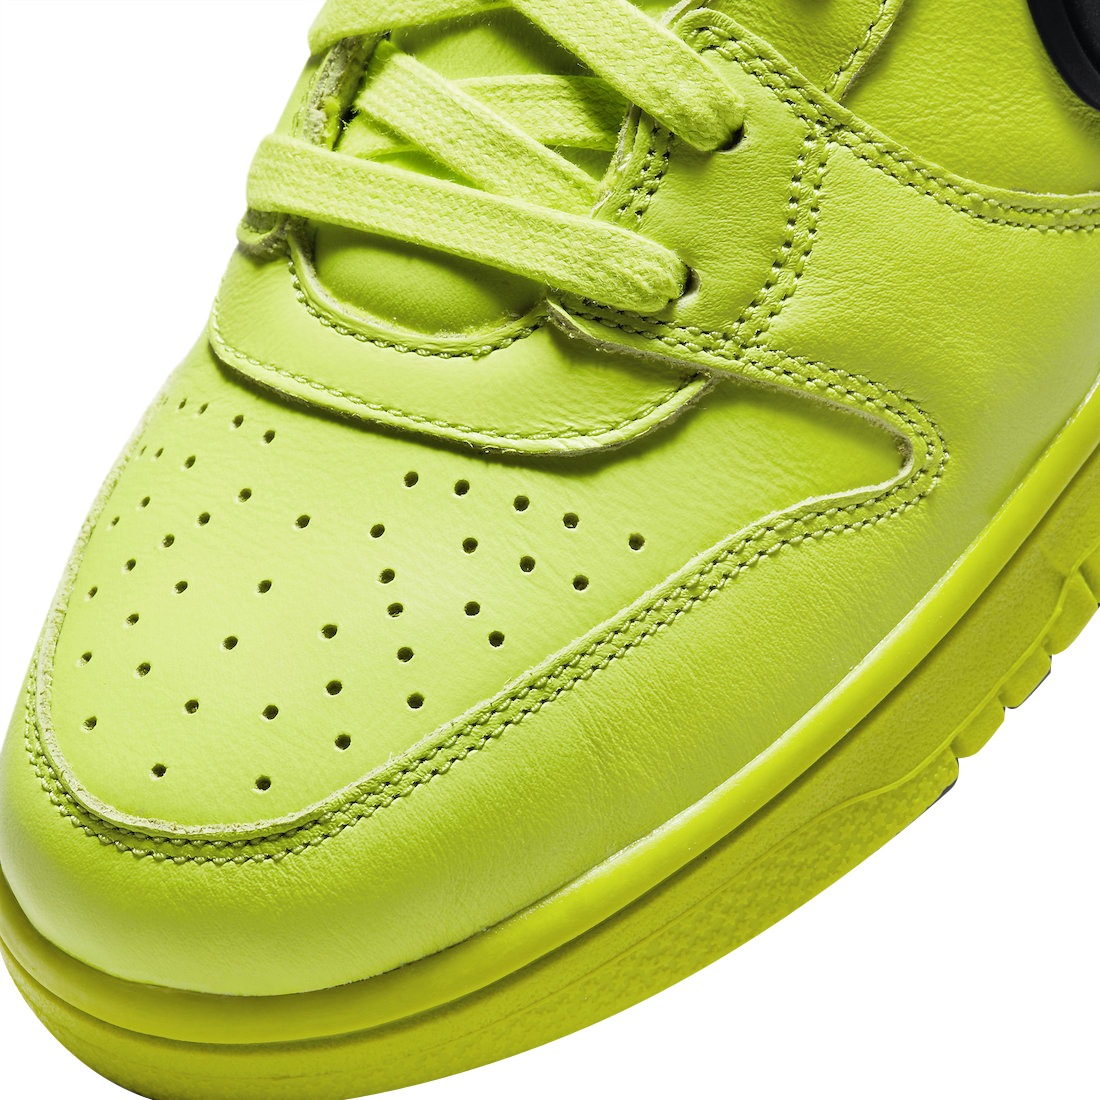 AMBUSH x Nike Dunk High Flash Lime CU7544-300